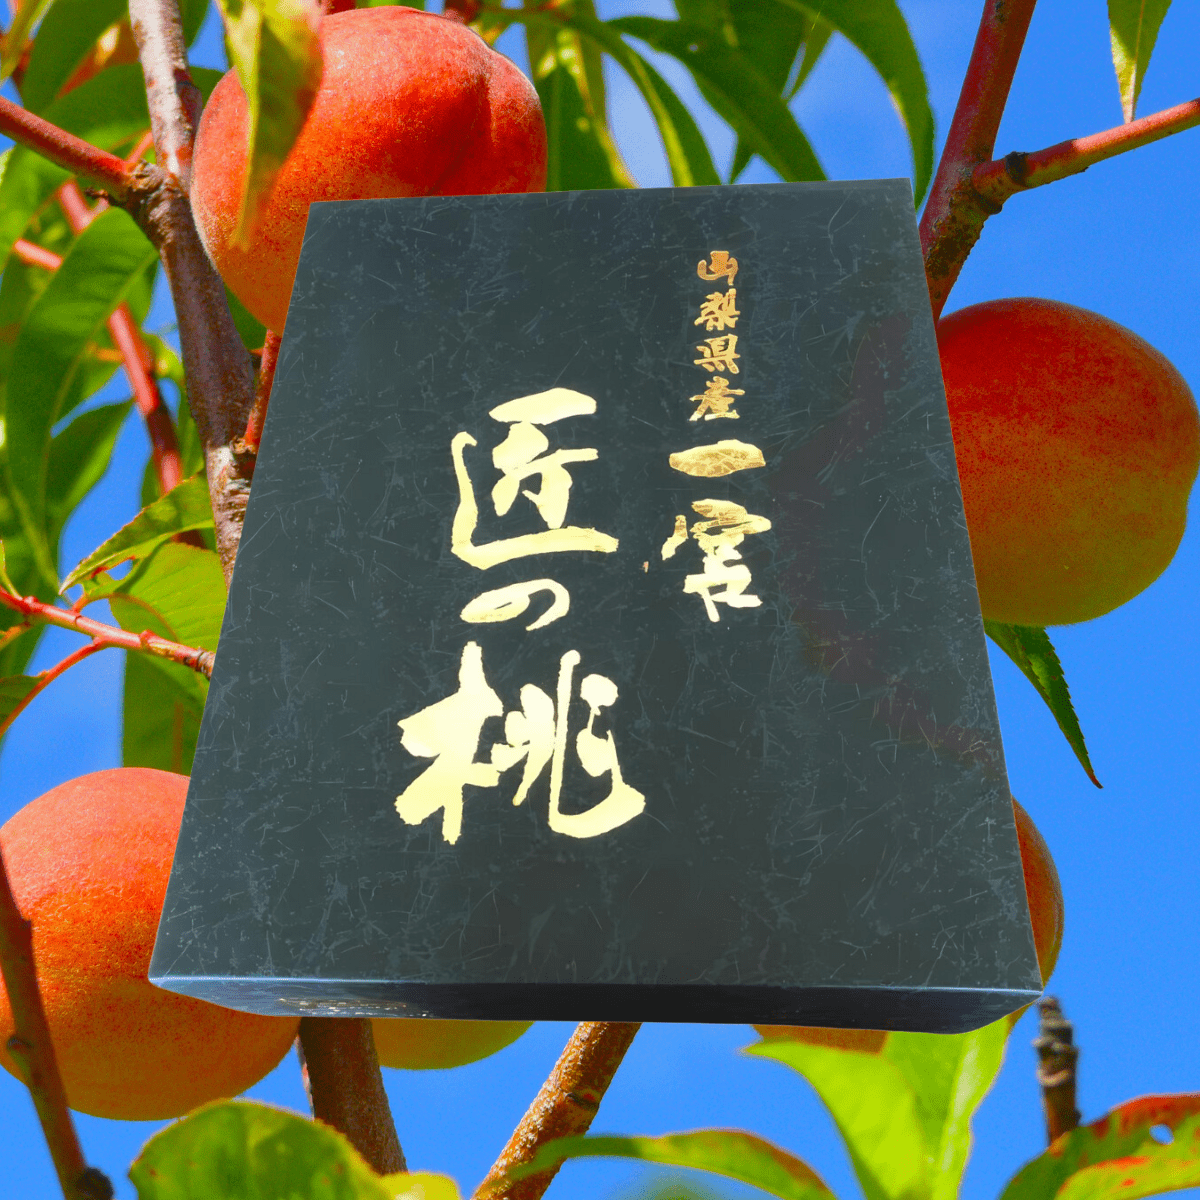 Premium peaches "Takumi no Peach"(about 2 kg in a decorative box)/ [2 - 3rd Aug Delivery] - Tokyo Fresh Direct